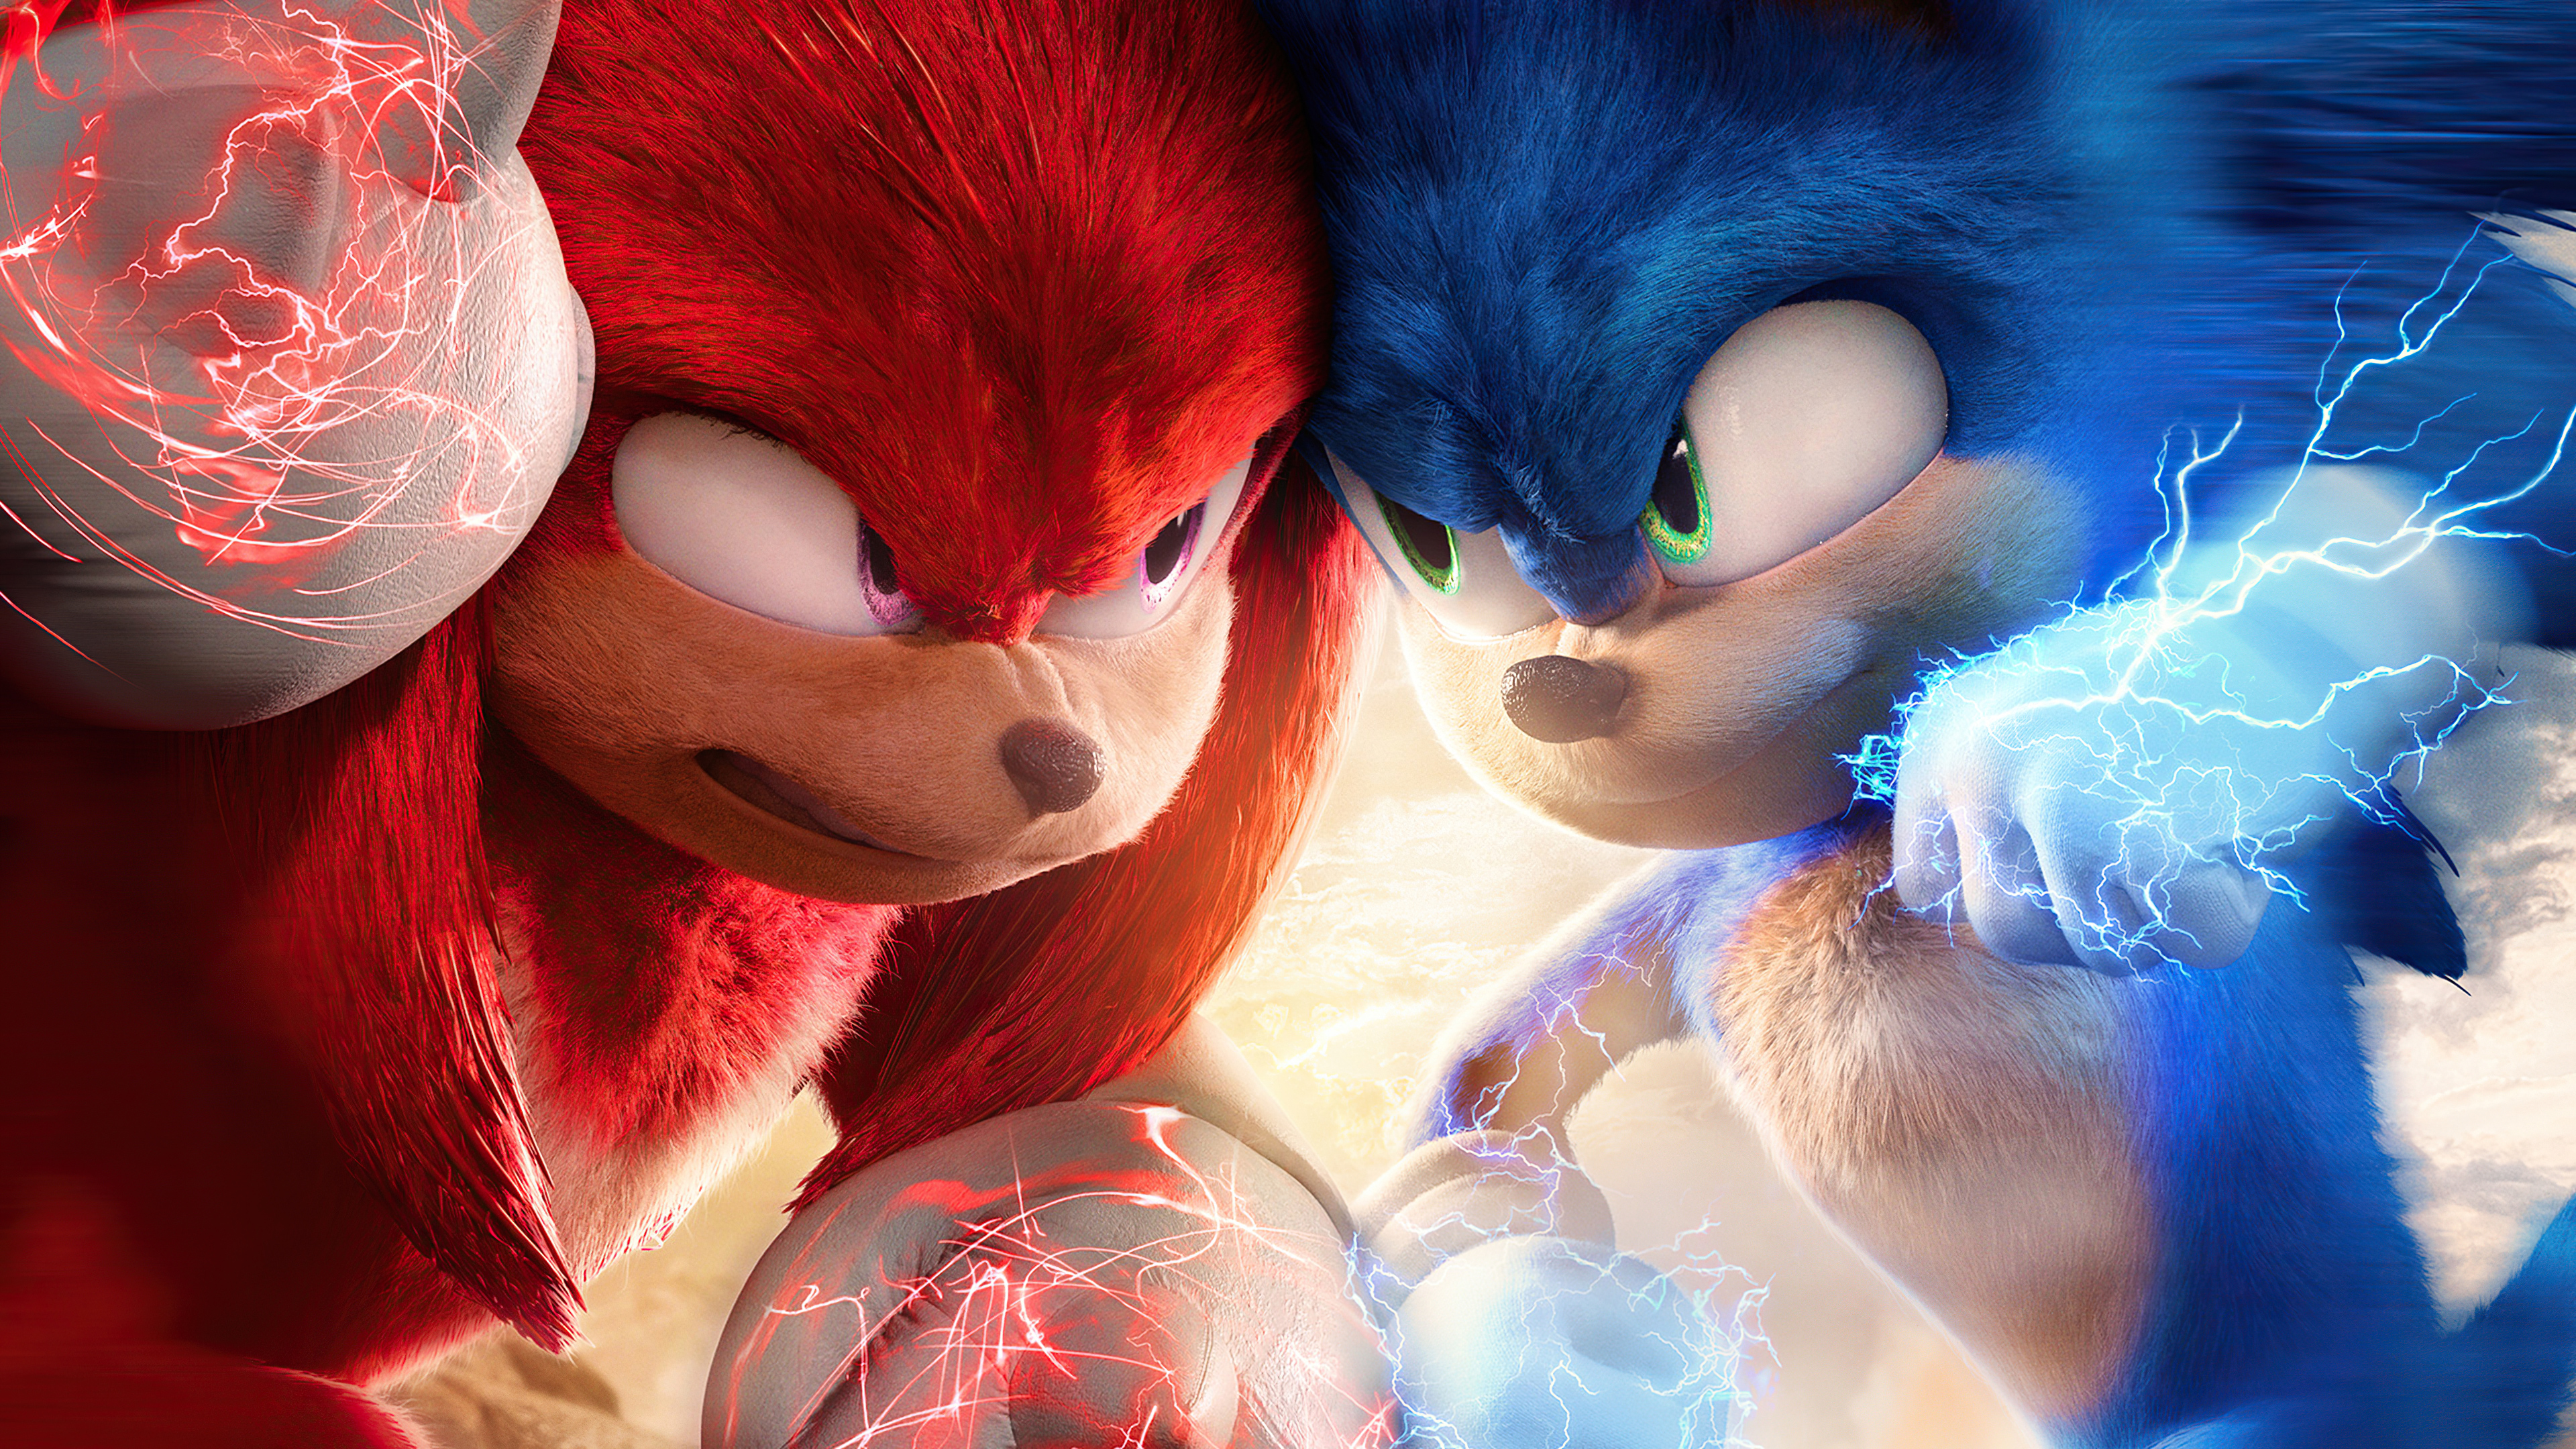 Sonic the hedgehog 2 movie in 2022.